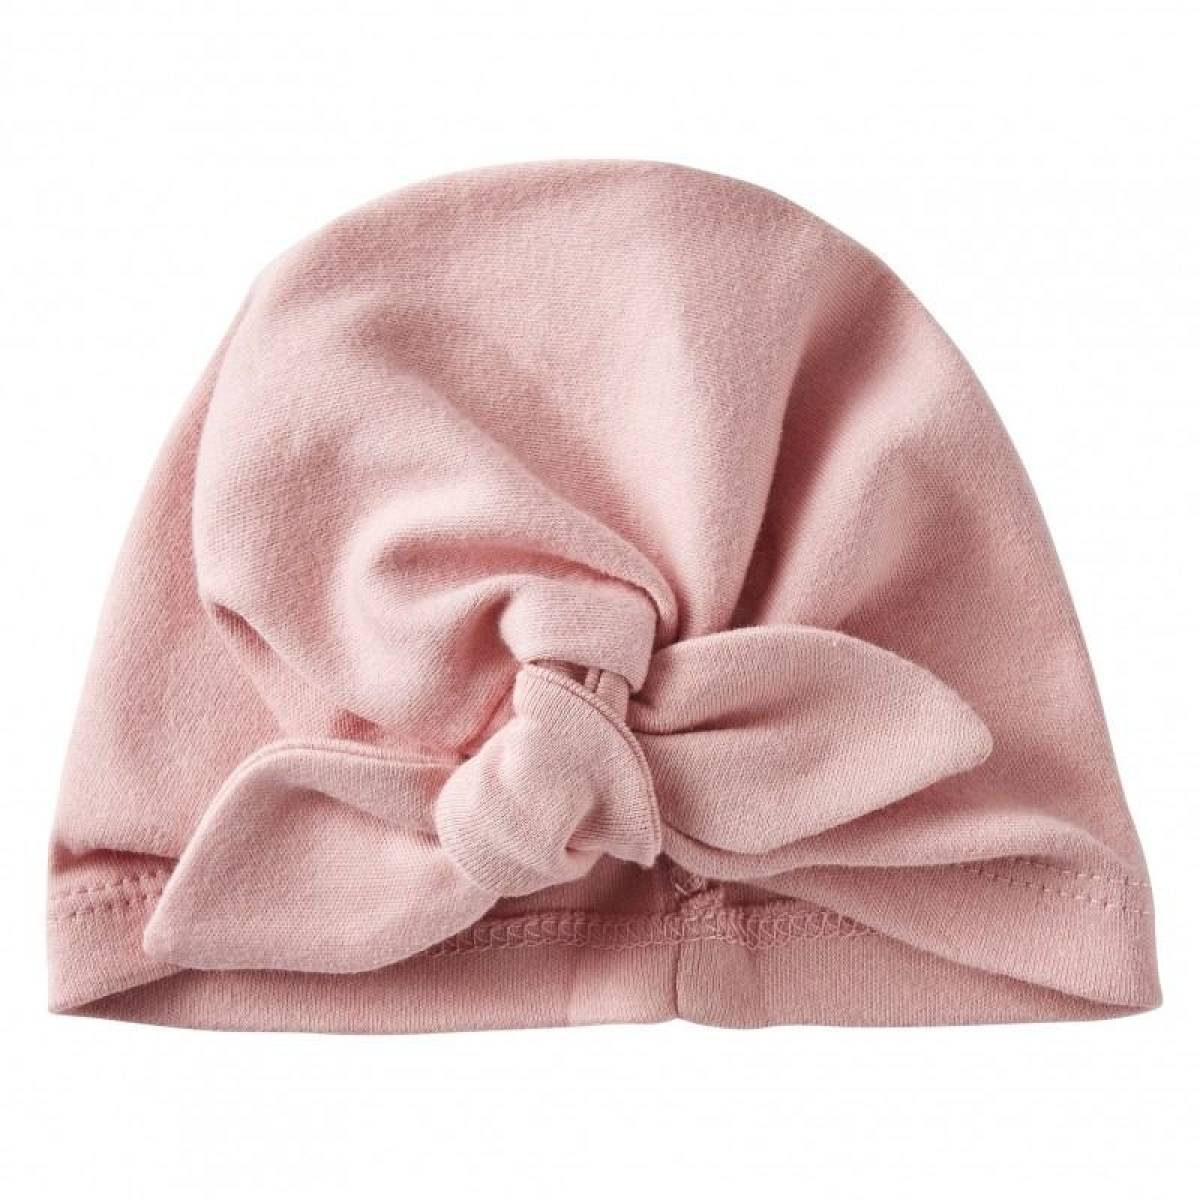 Bonnet naissance forme turban rose pastel